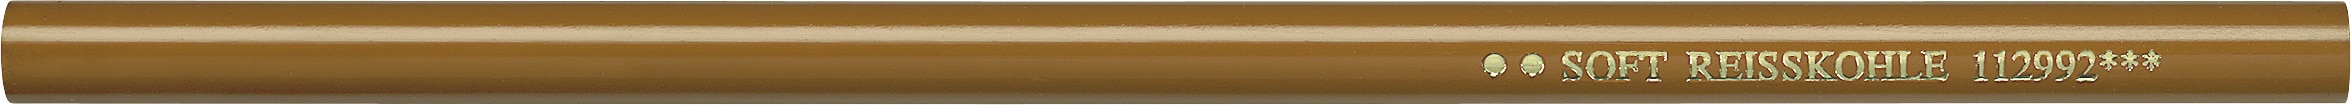 Pitt Comp Charcoal Pencil Soft